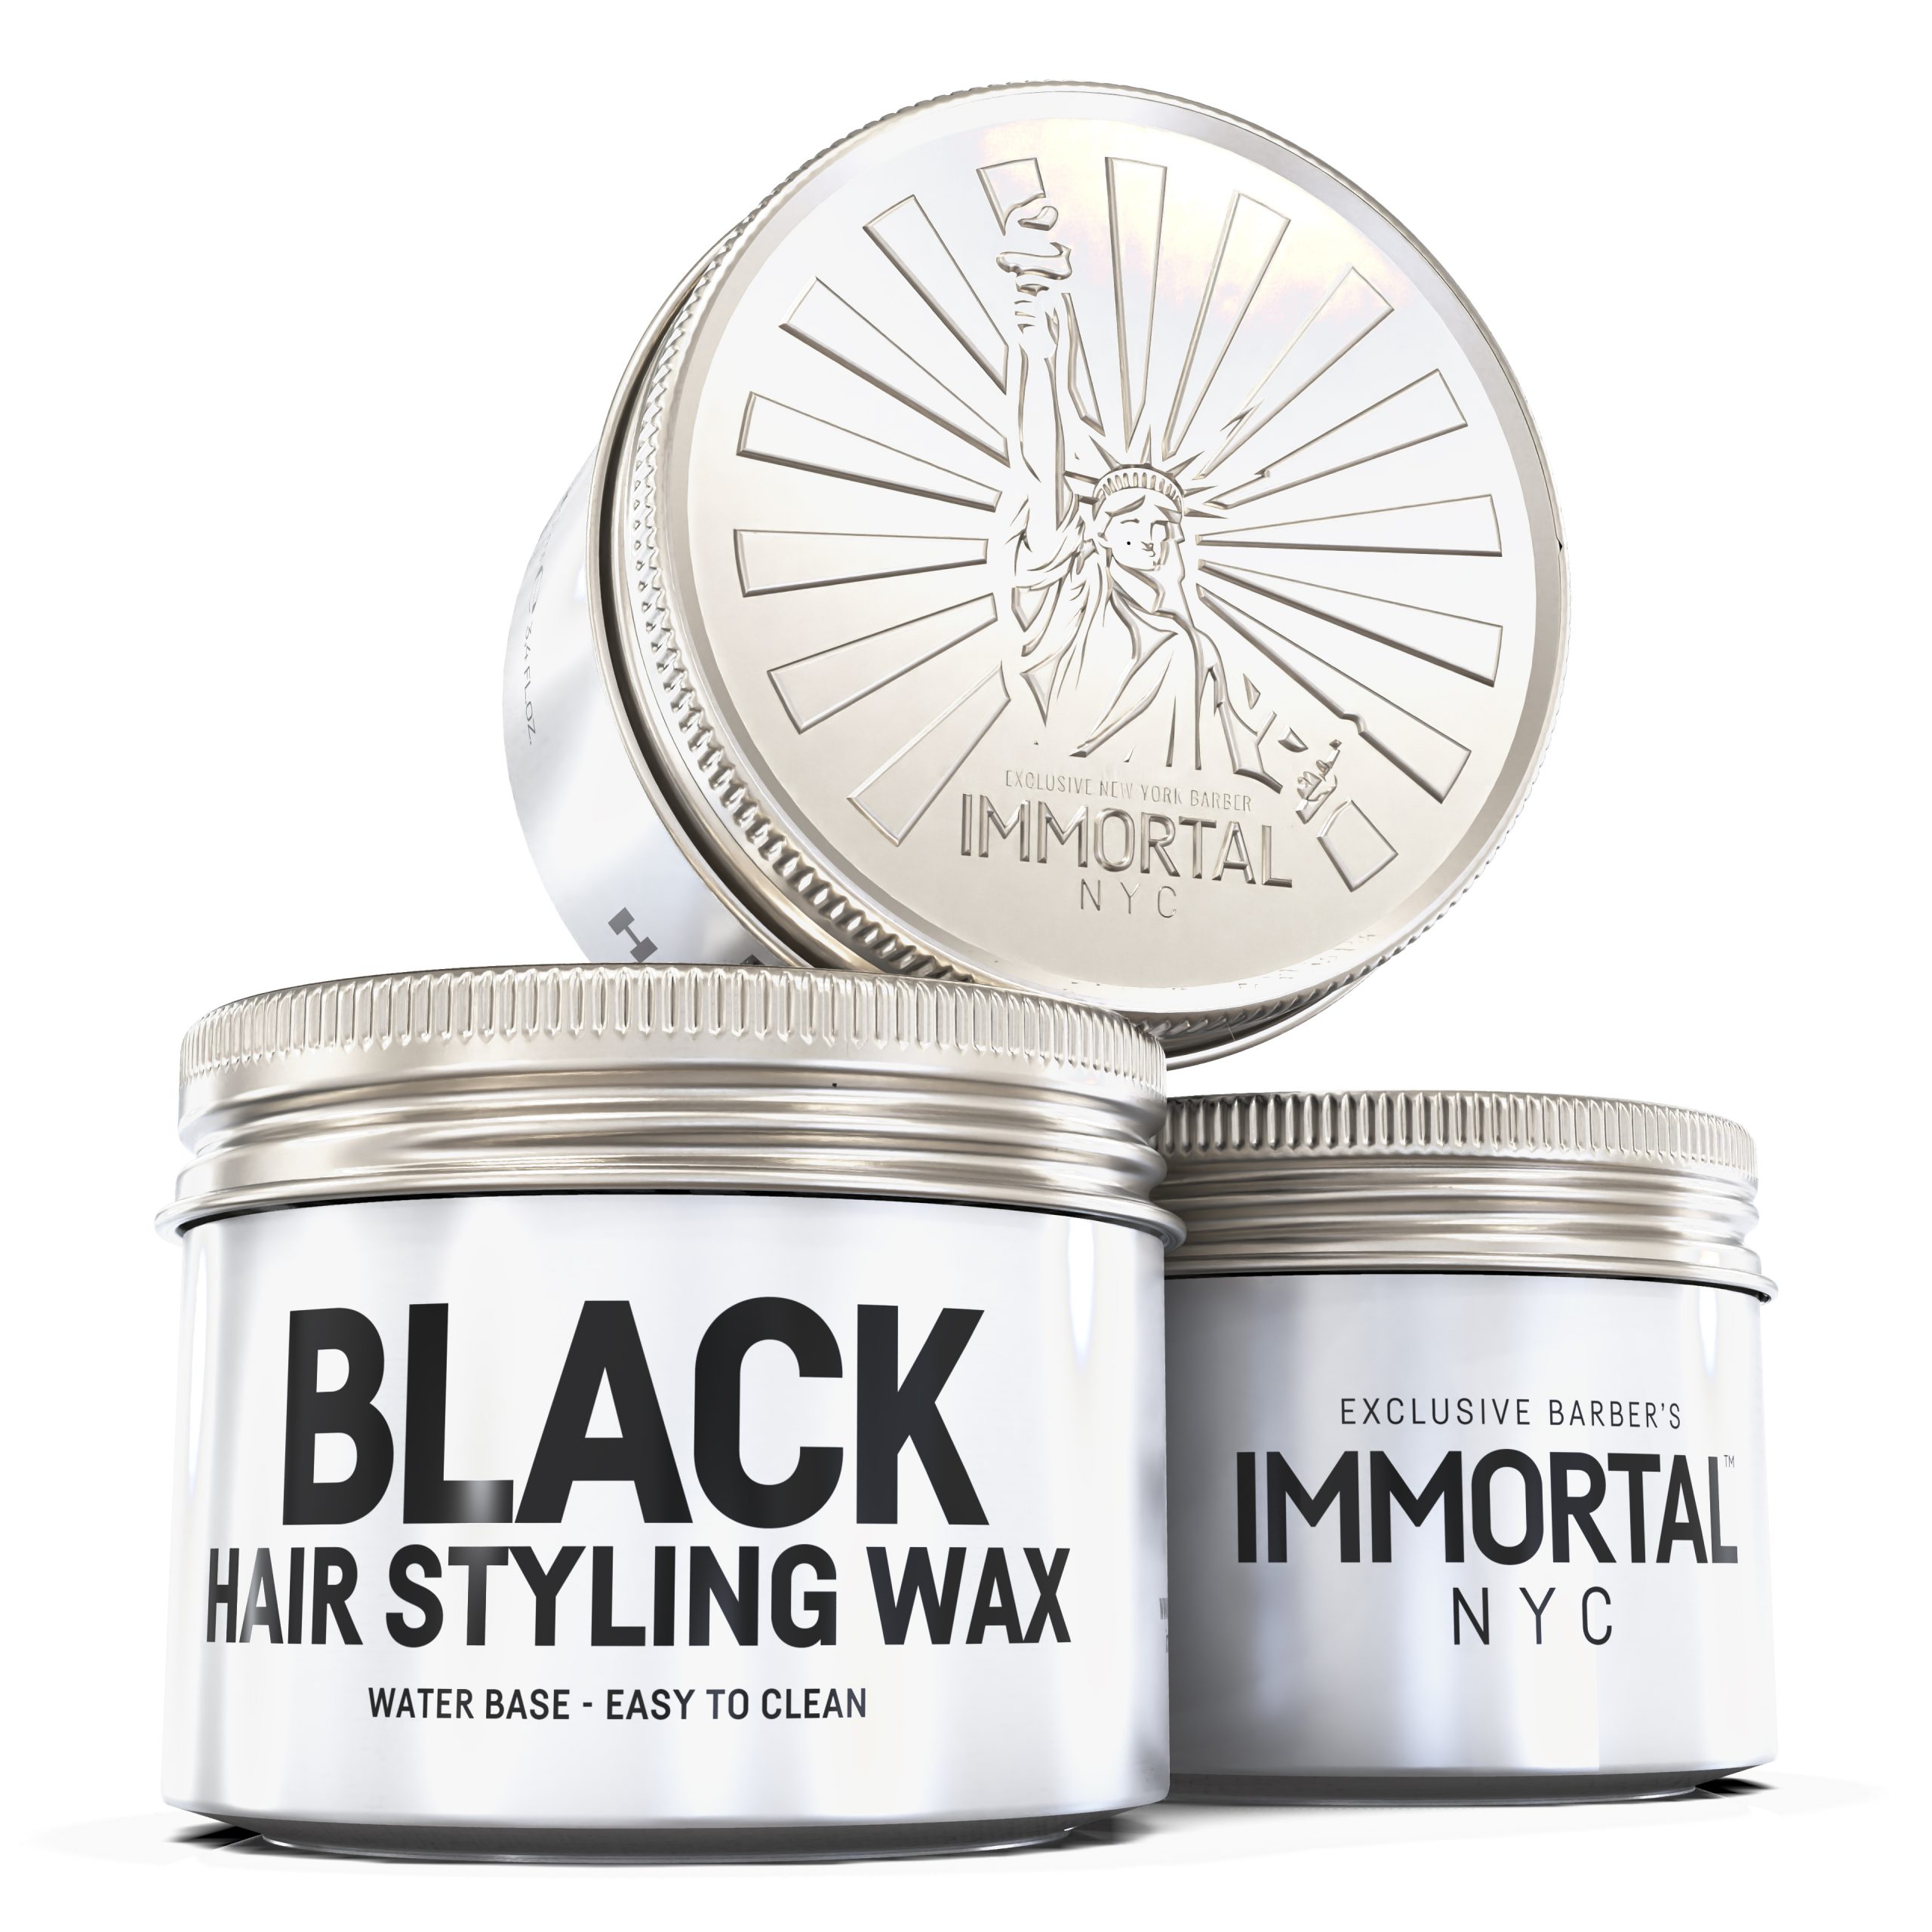 HAIR STYLING WAX - IMMORTAL